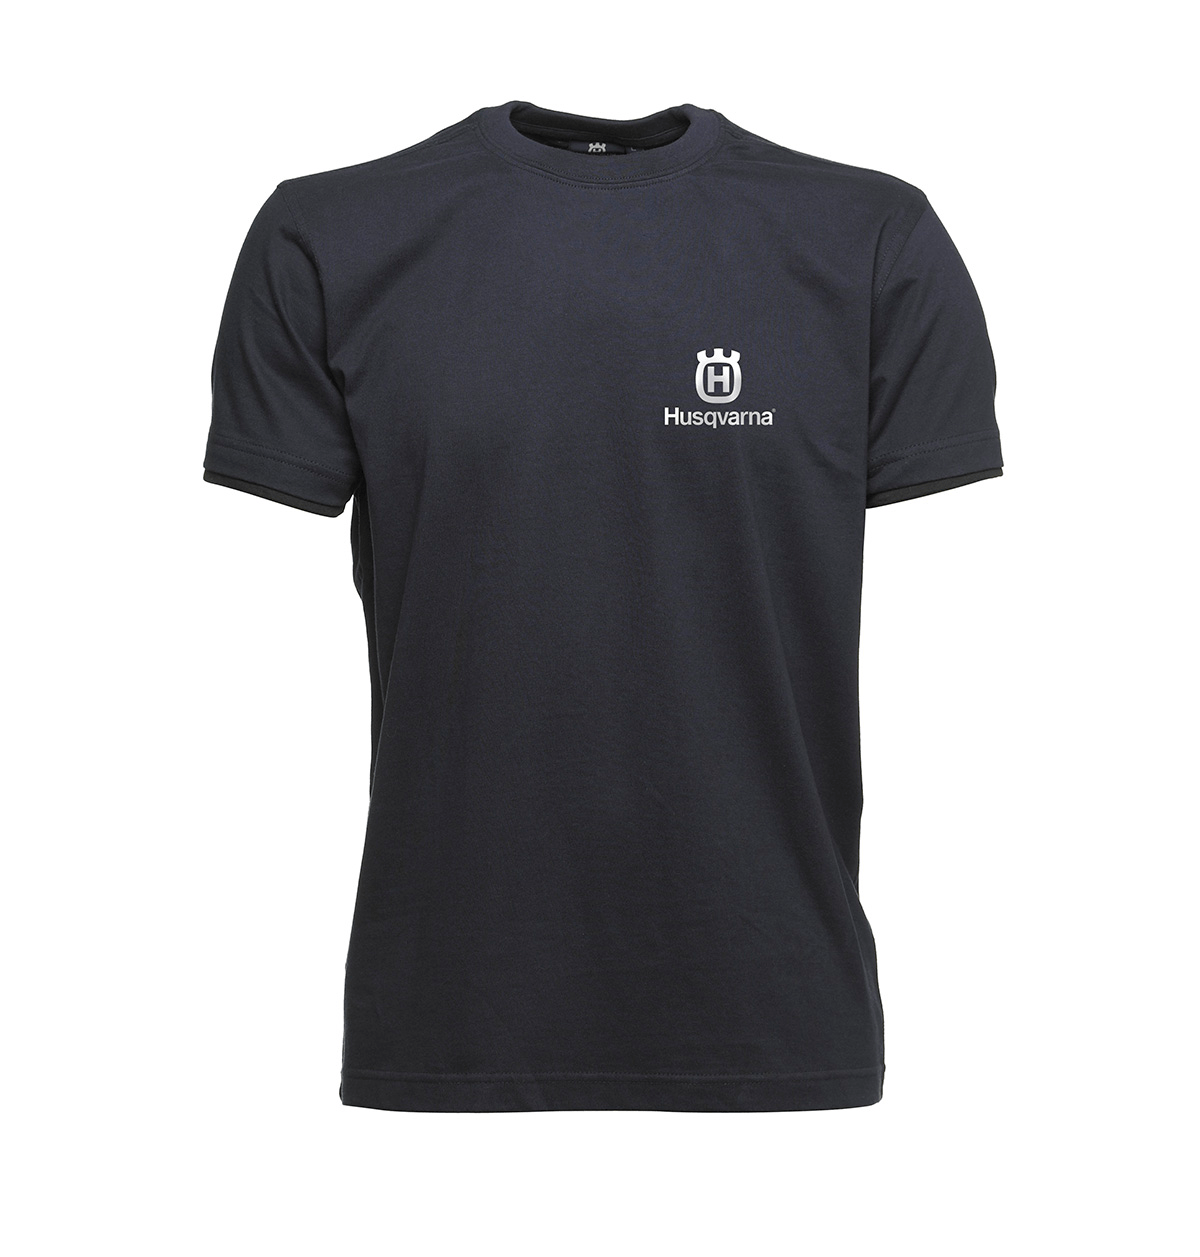 Husqvarna Unisex T-Shirt Navy